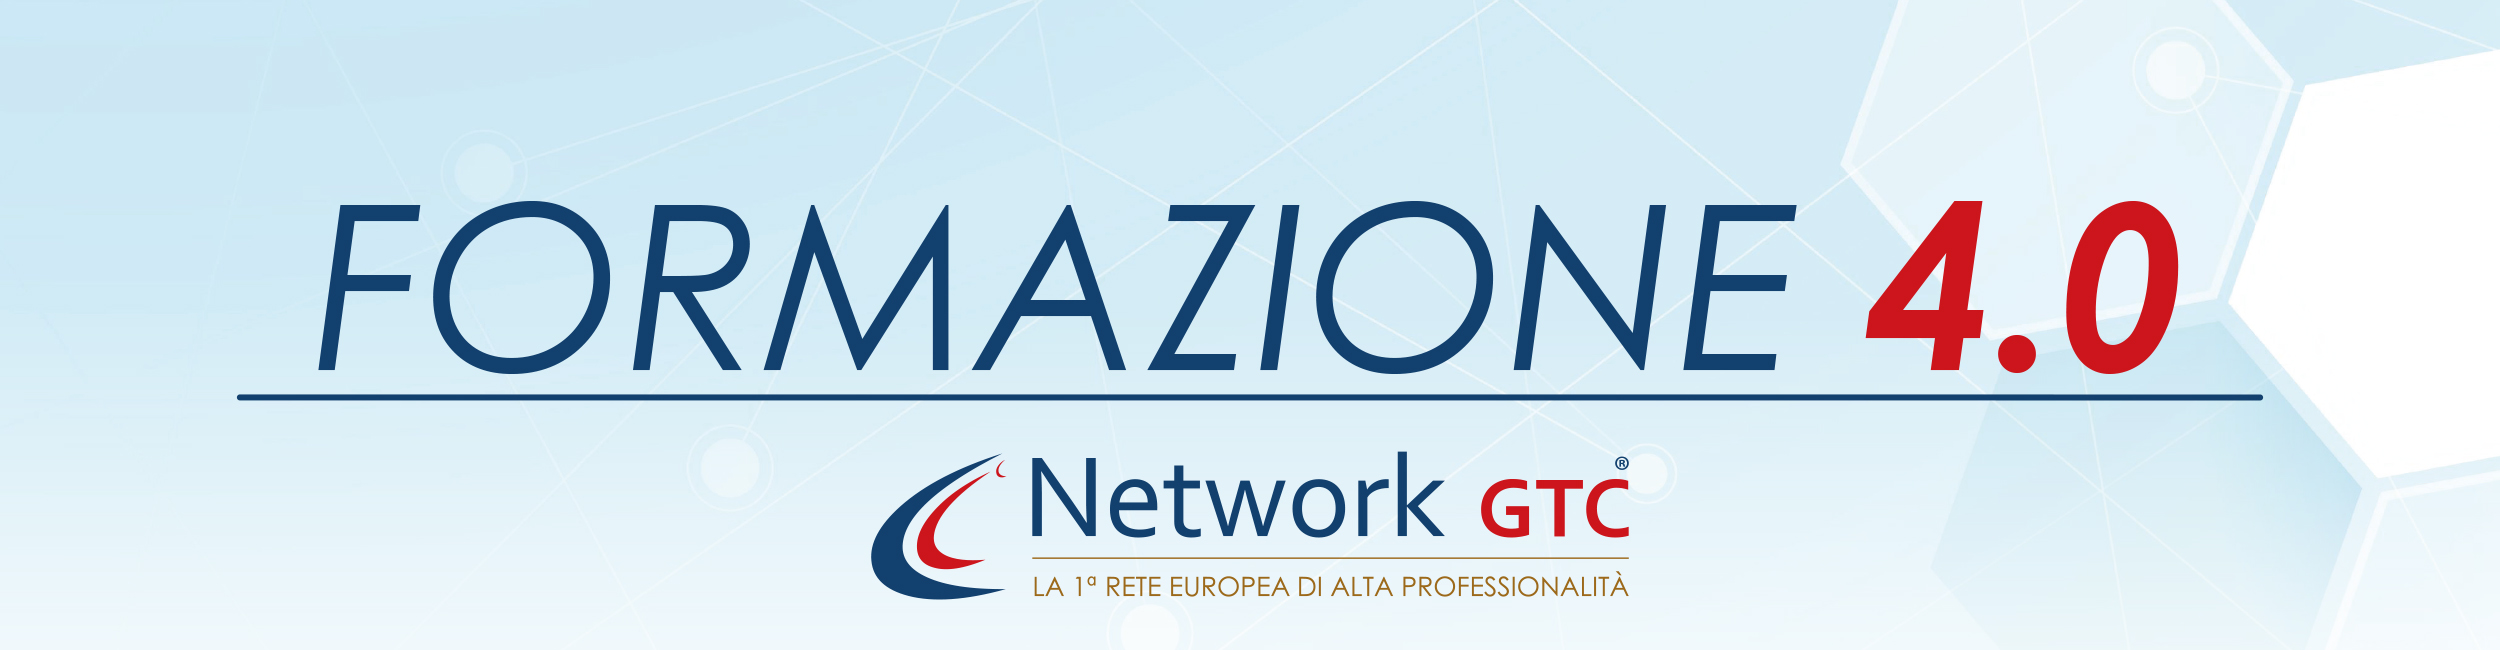 Network GTC Newsletter Formazione 4.0